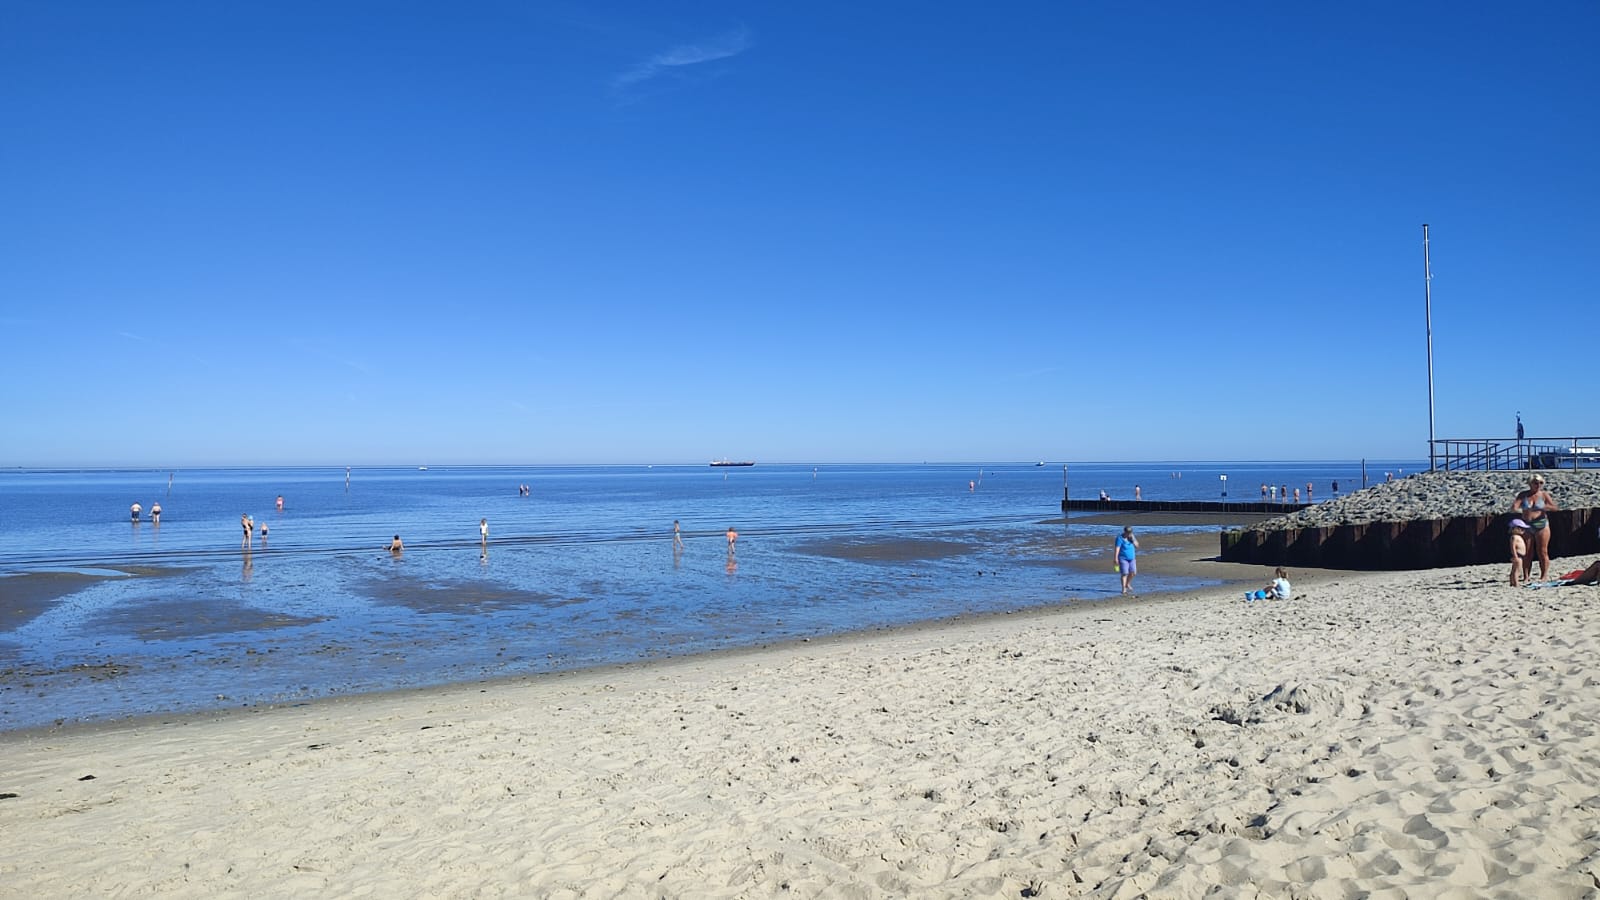 Fotografija Plaža Hooksiel z turkizna čista voda površino